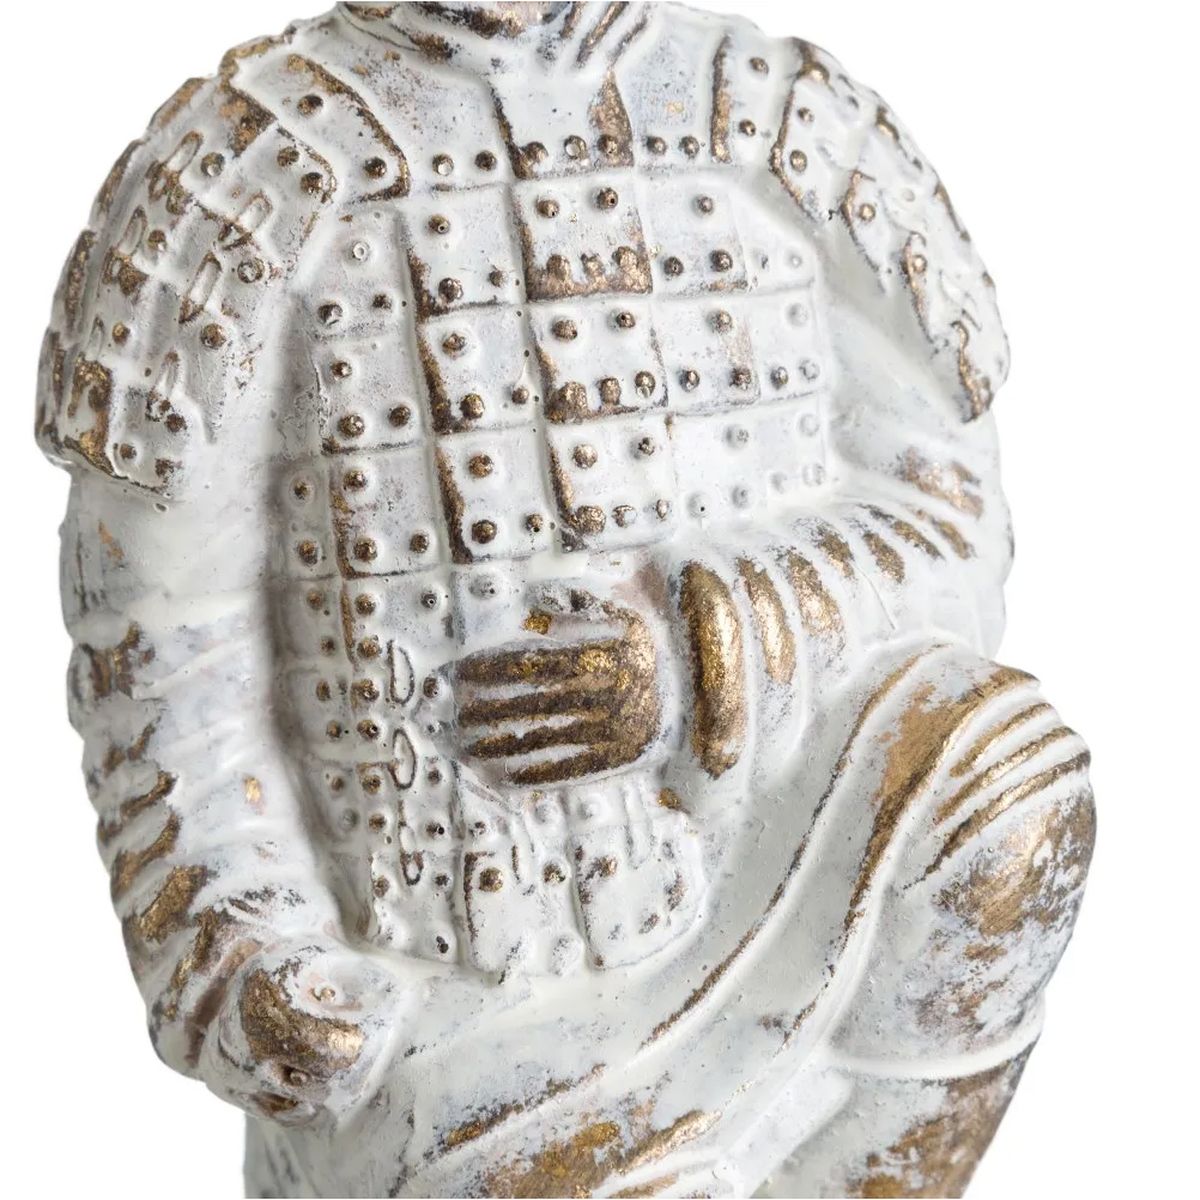 Soldier Statuette of Emperor Qin